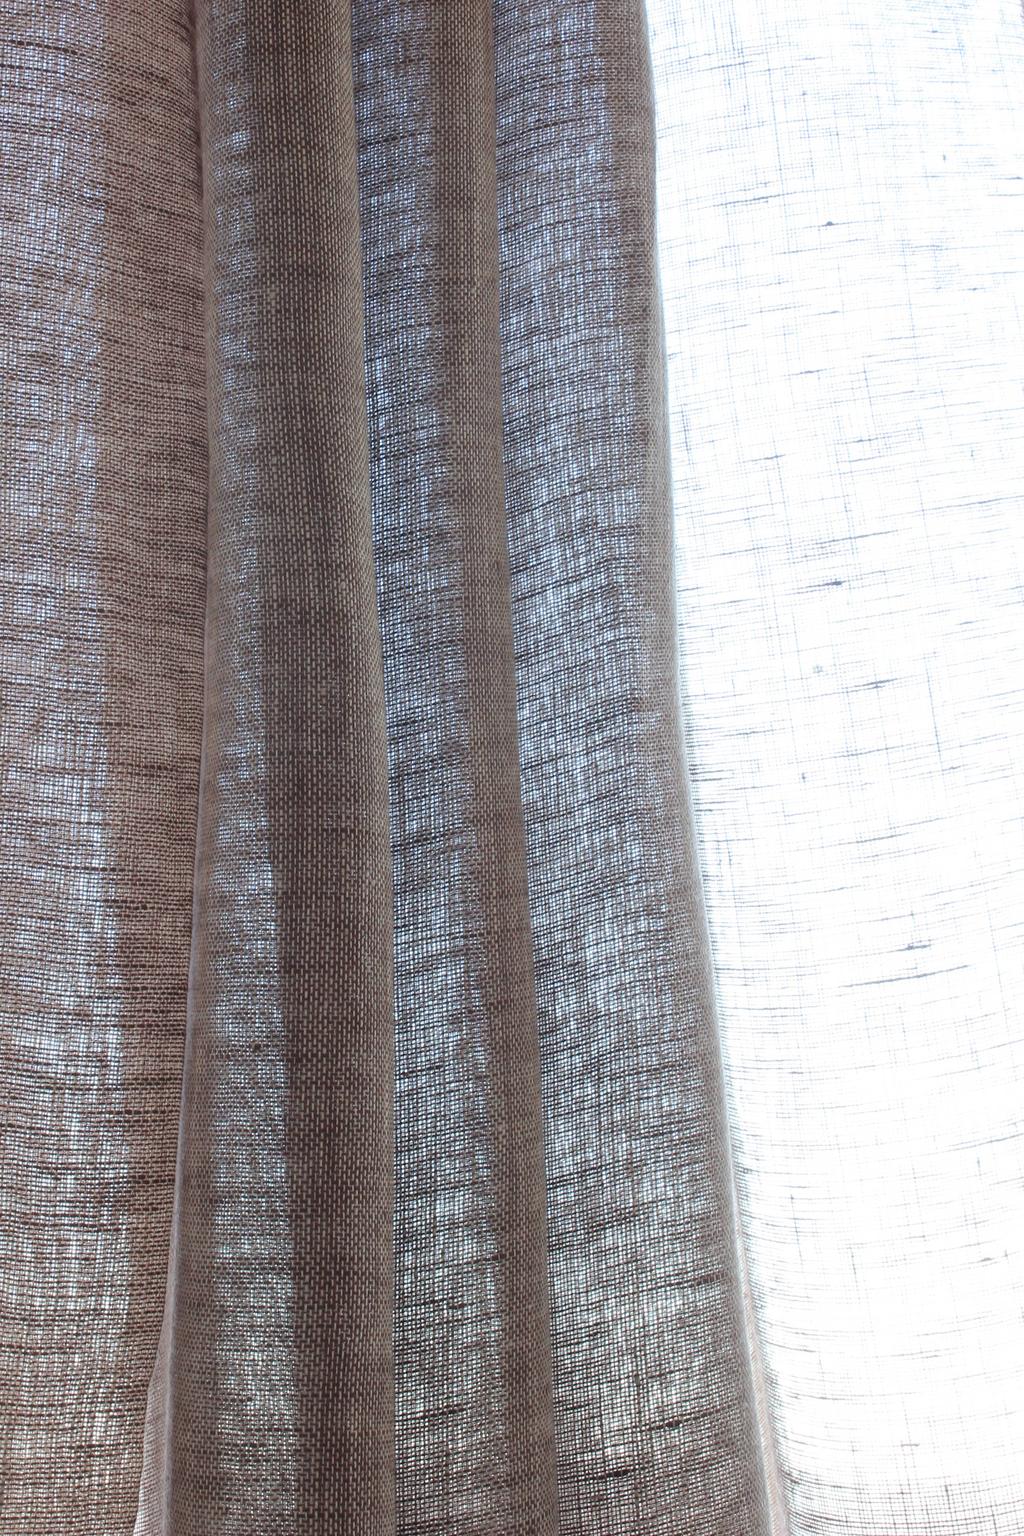 Use: Semi-transparent curtain fabric Number of